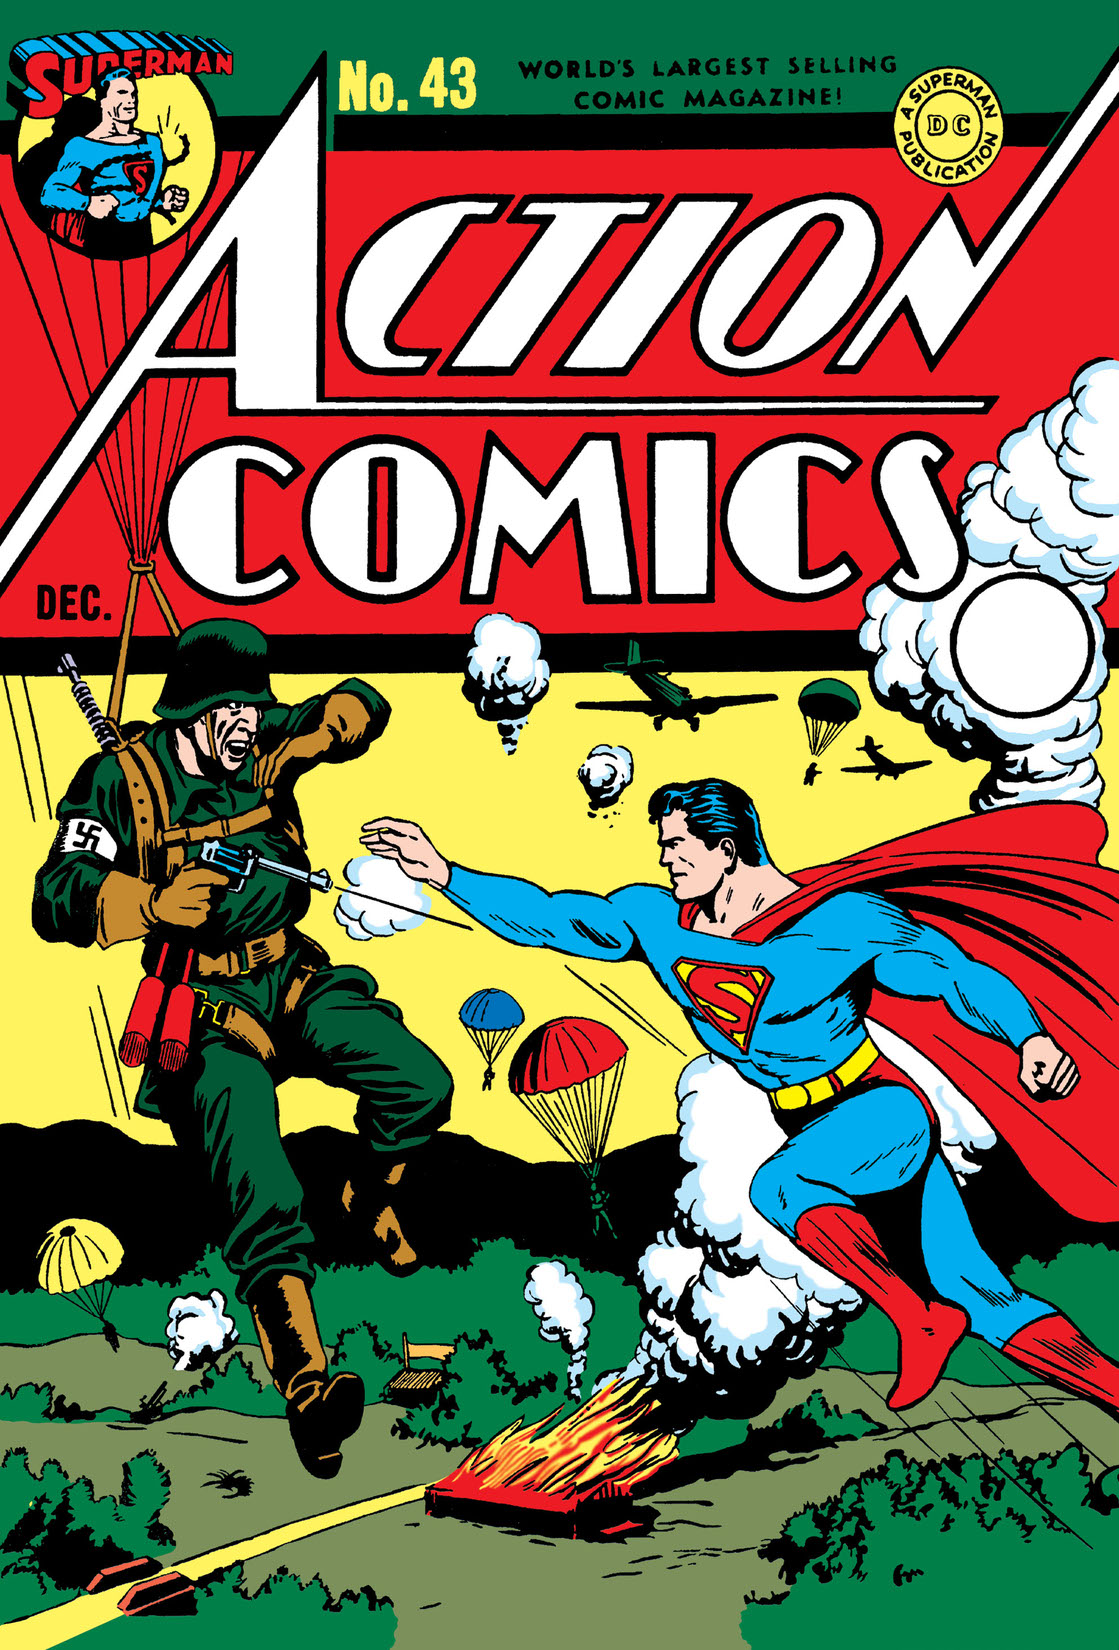 Action Comics (1941-) #43 preview images